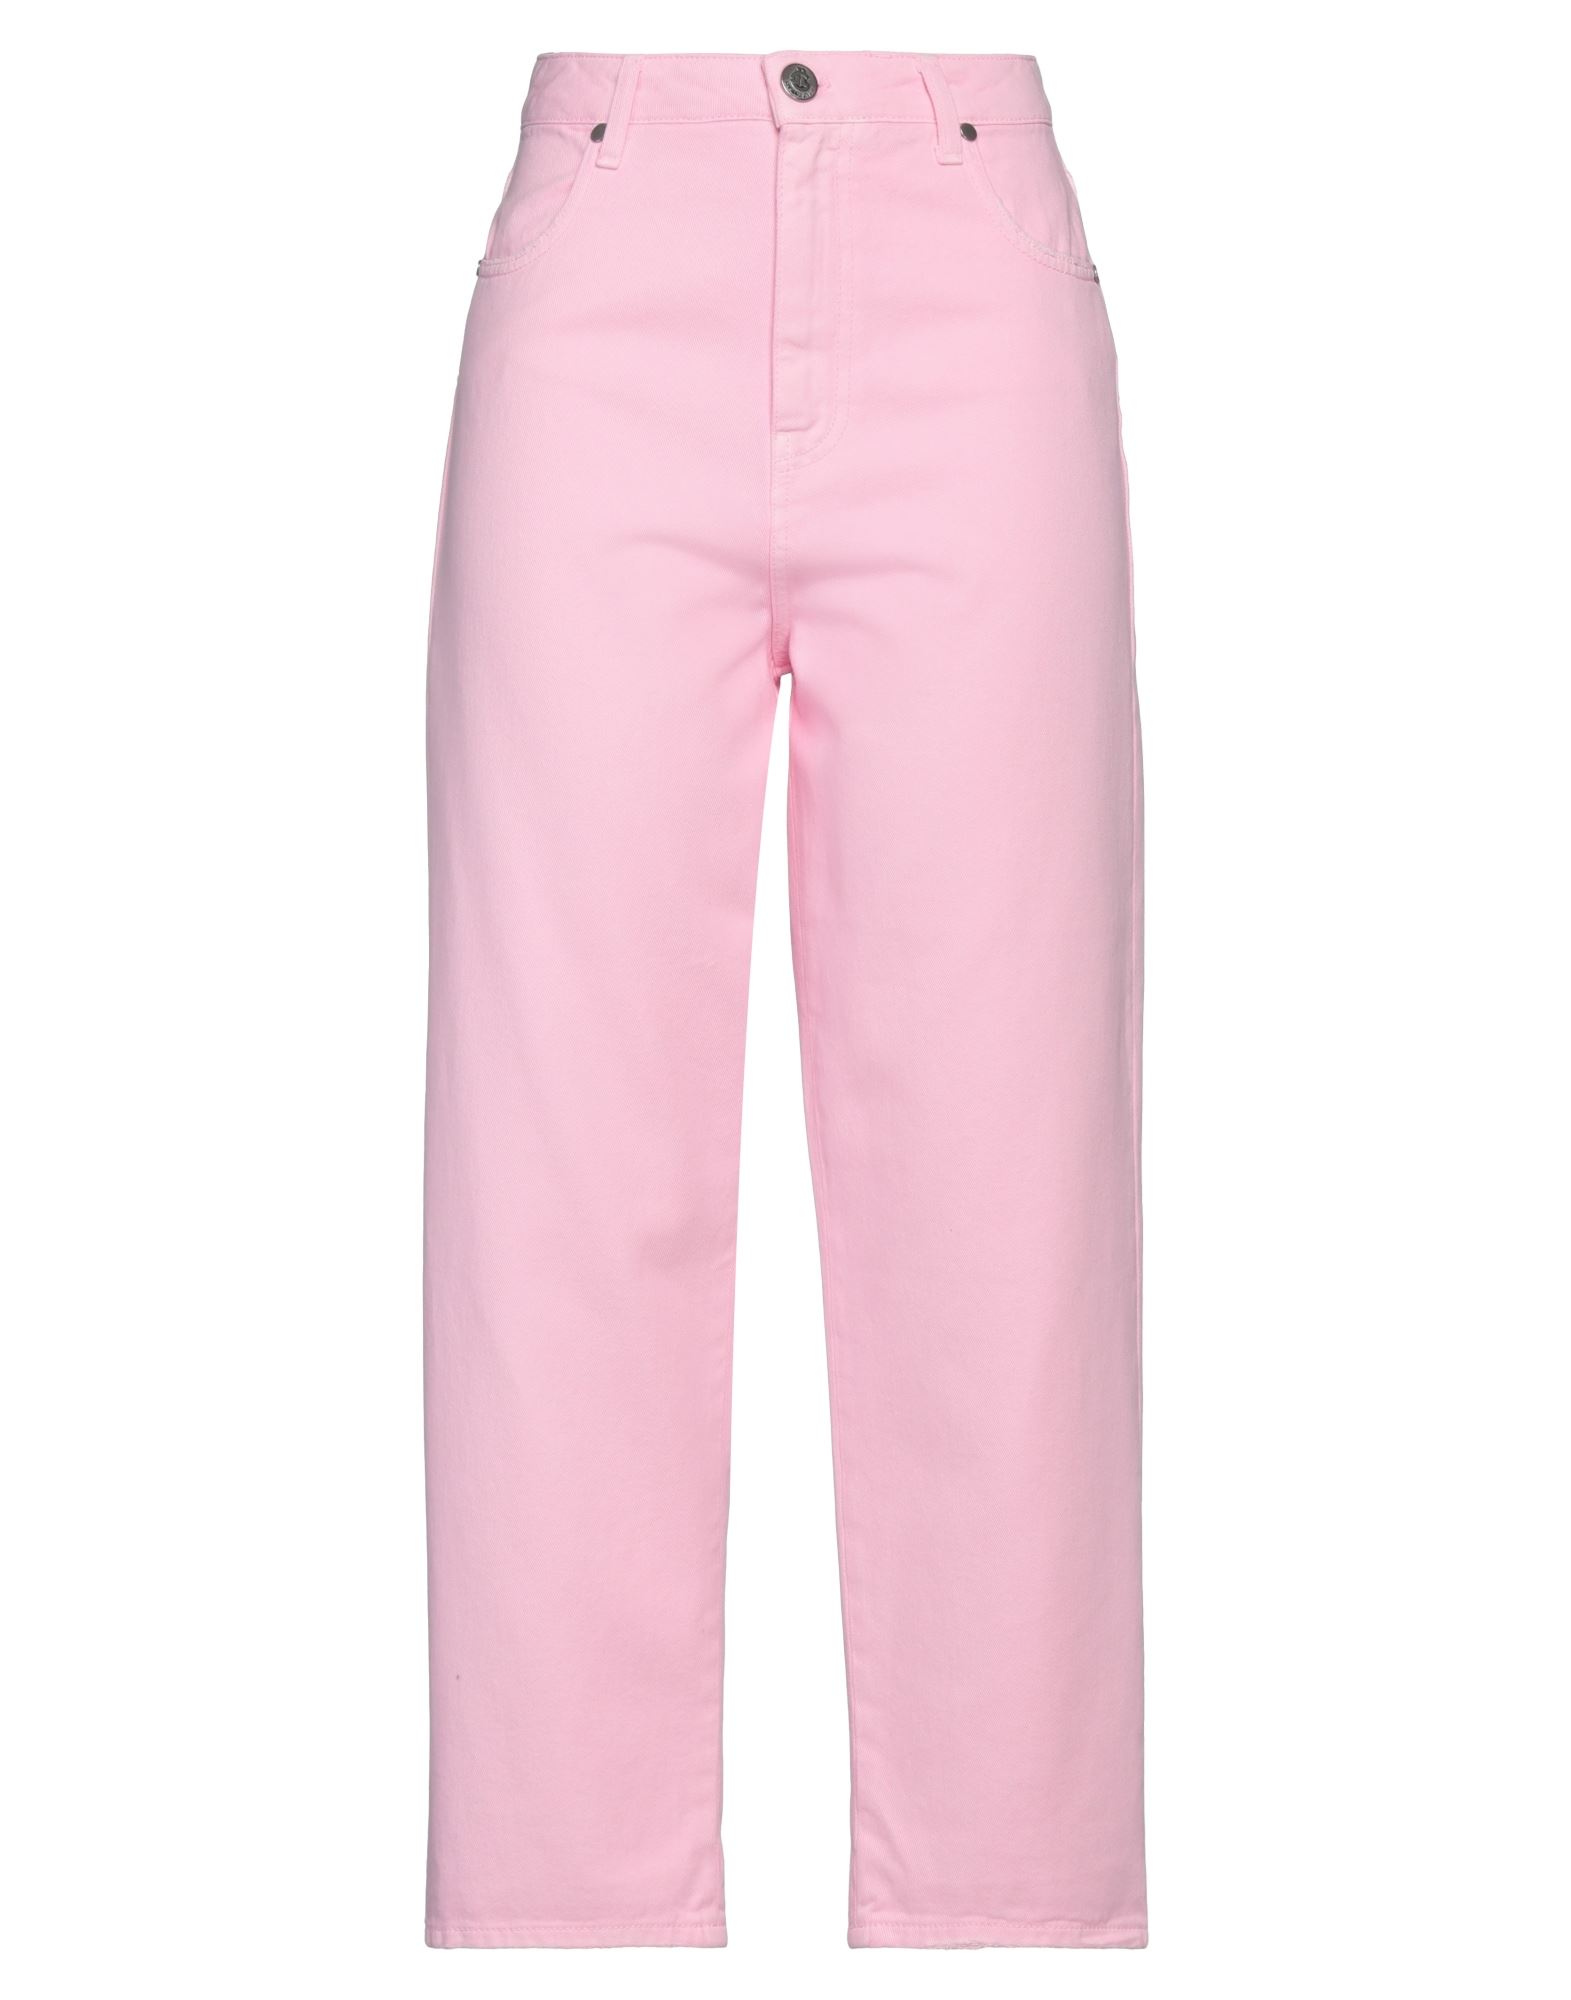 Gaelle Paris Jeans In Pink